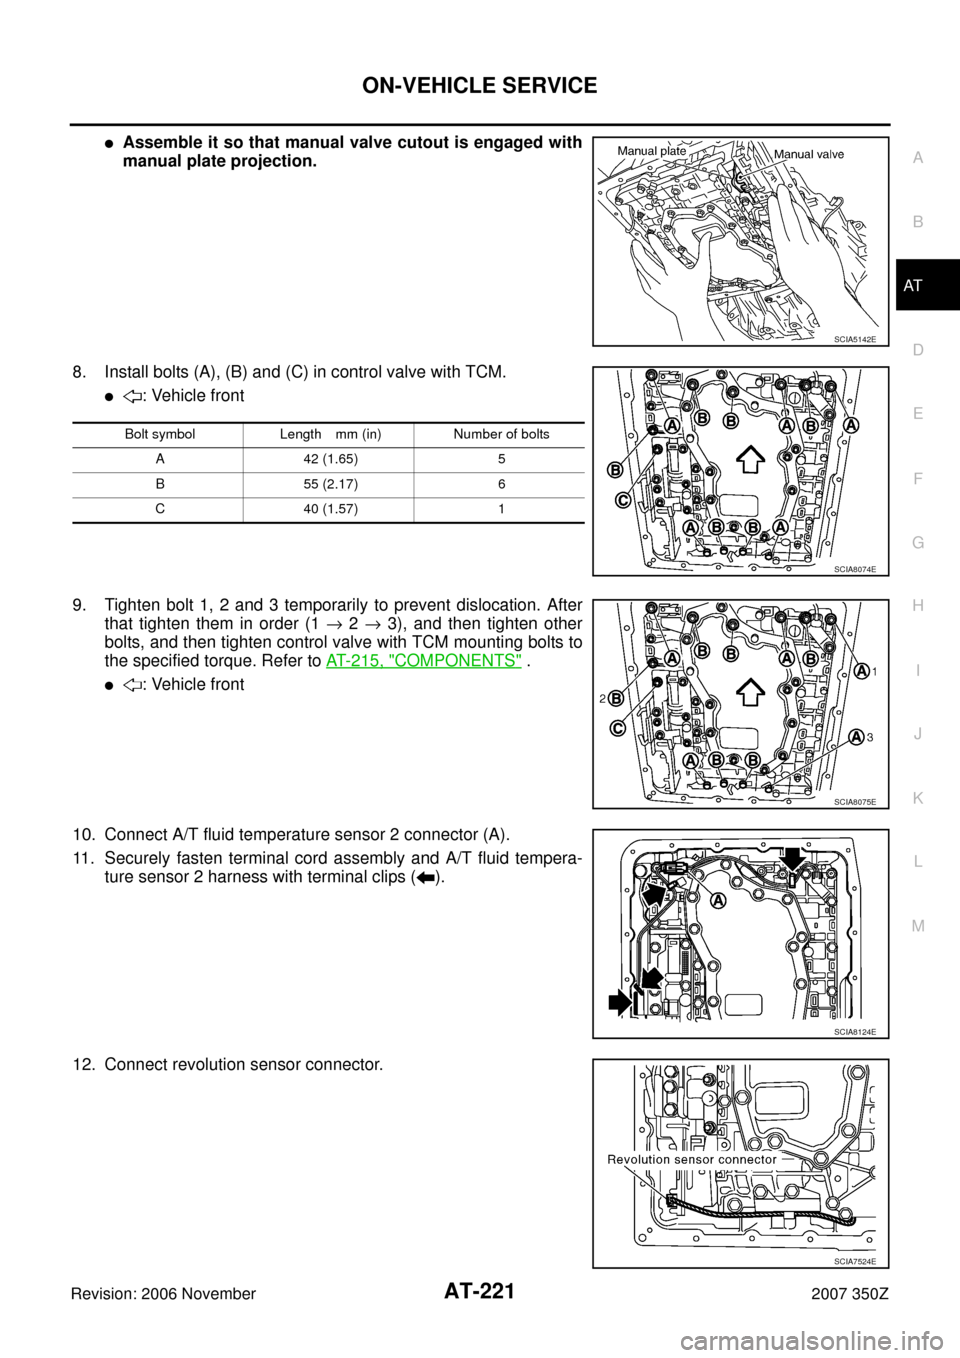 NISSAN 350Z 2007 Z33 Automatic Transmission Workshop Manual ON-VEHICLE SERVICE
AT-221
D
E
F
G
H
I
J
K
L
MA
B
AT
Revision: 2006 November2007 350Z
Assemble it so that manual valve cutout is engaged with
manual plate projection.
8. Install bolts (A), (B) and (C)